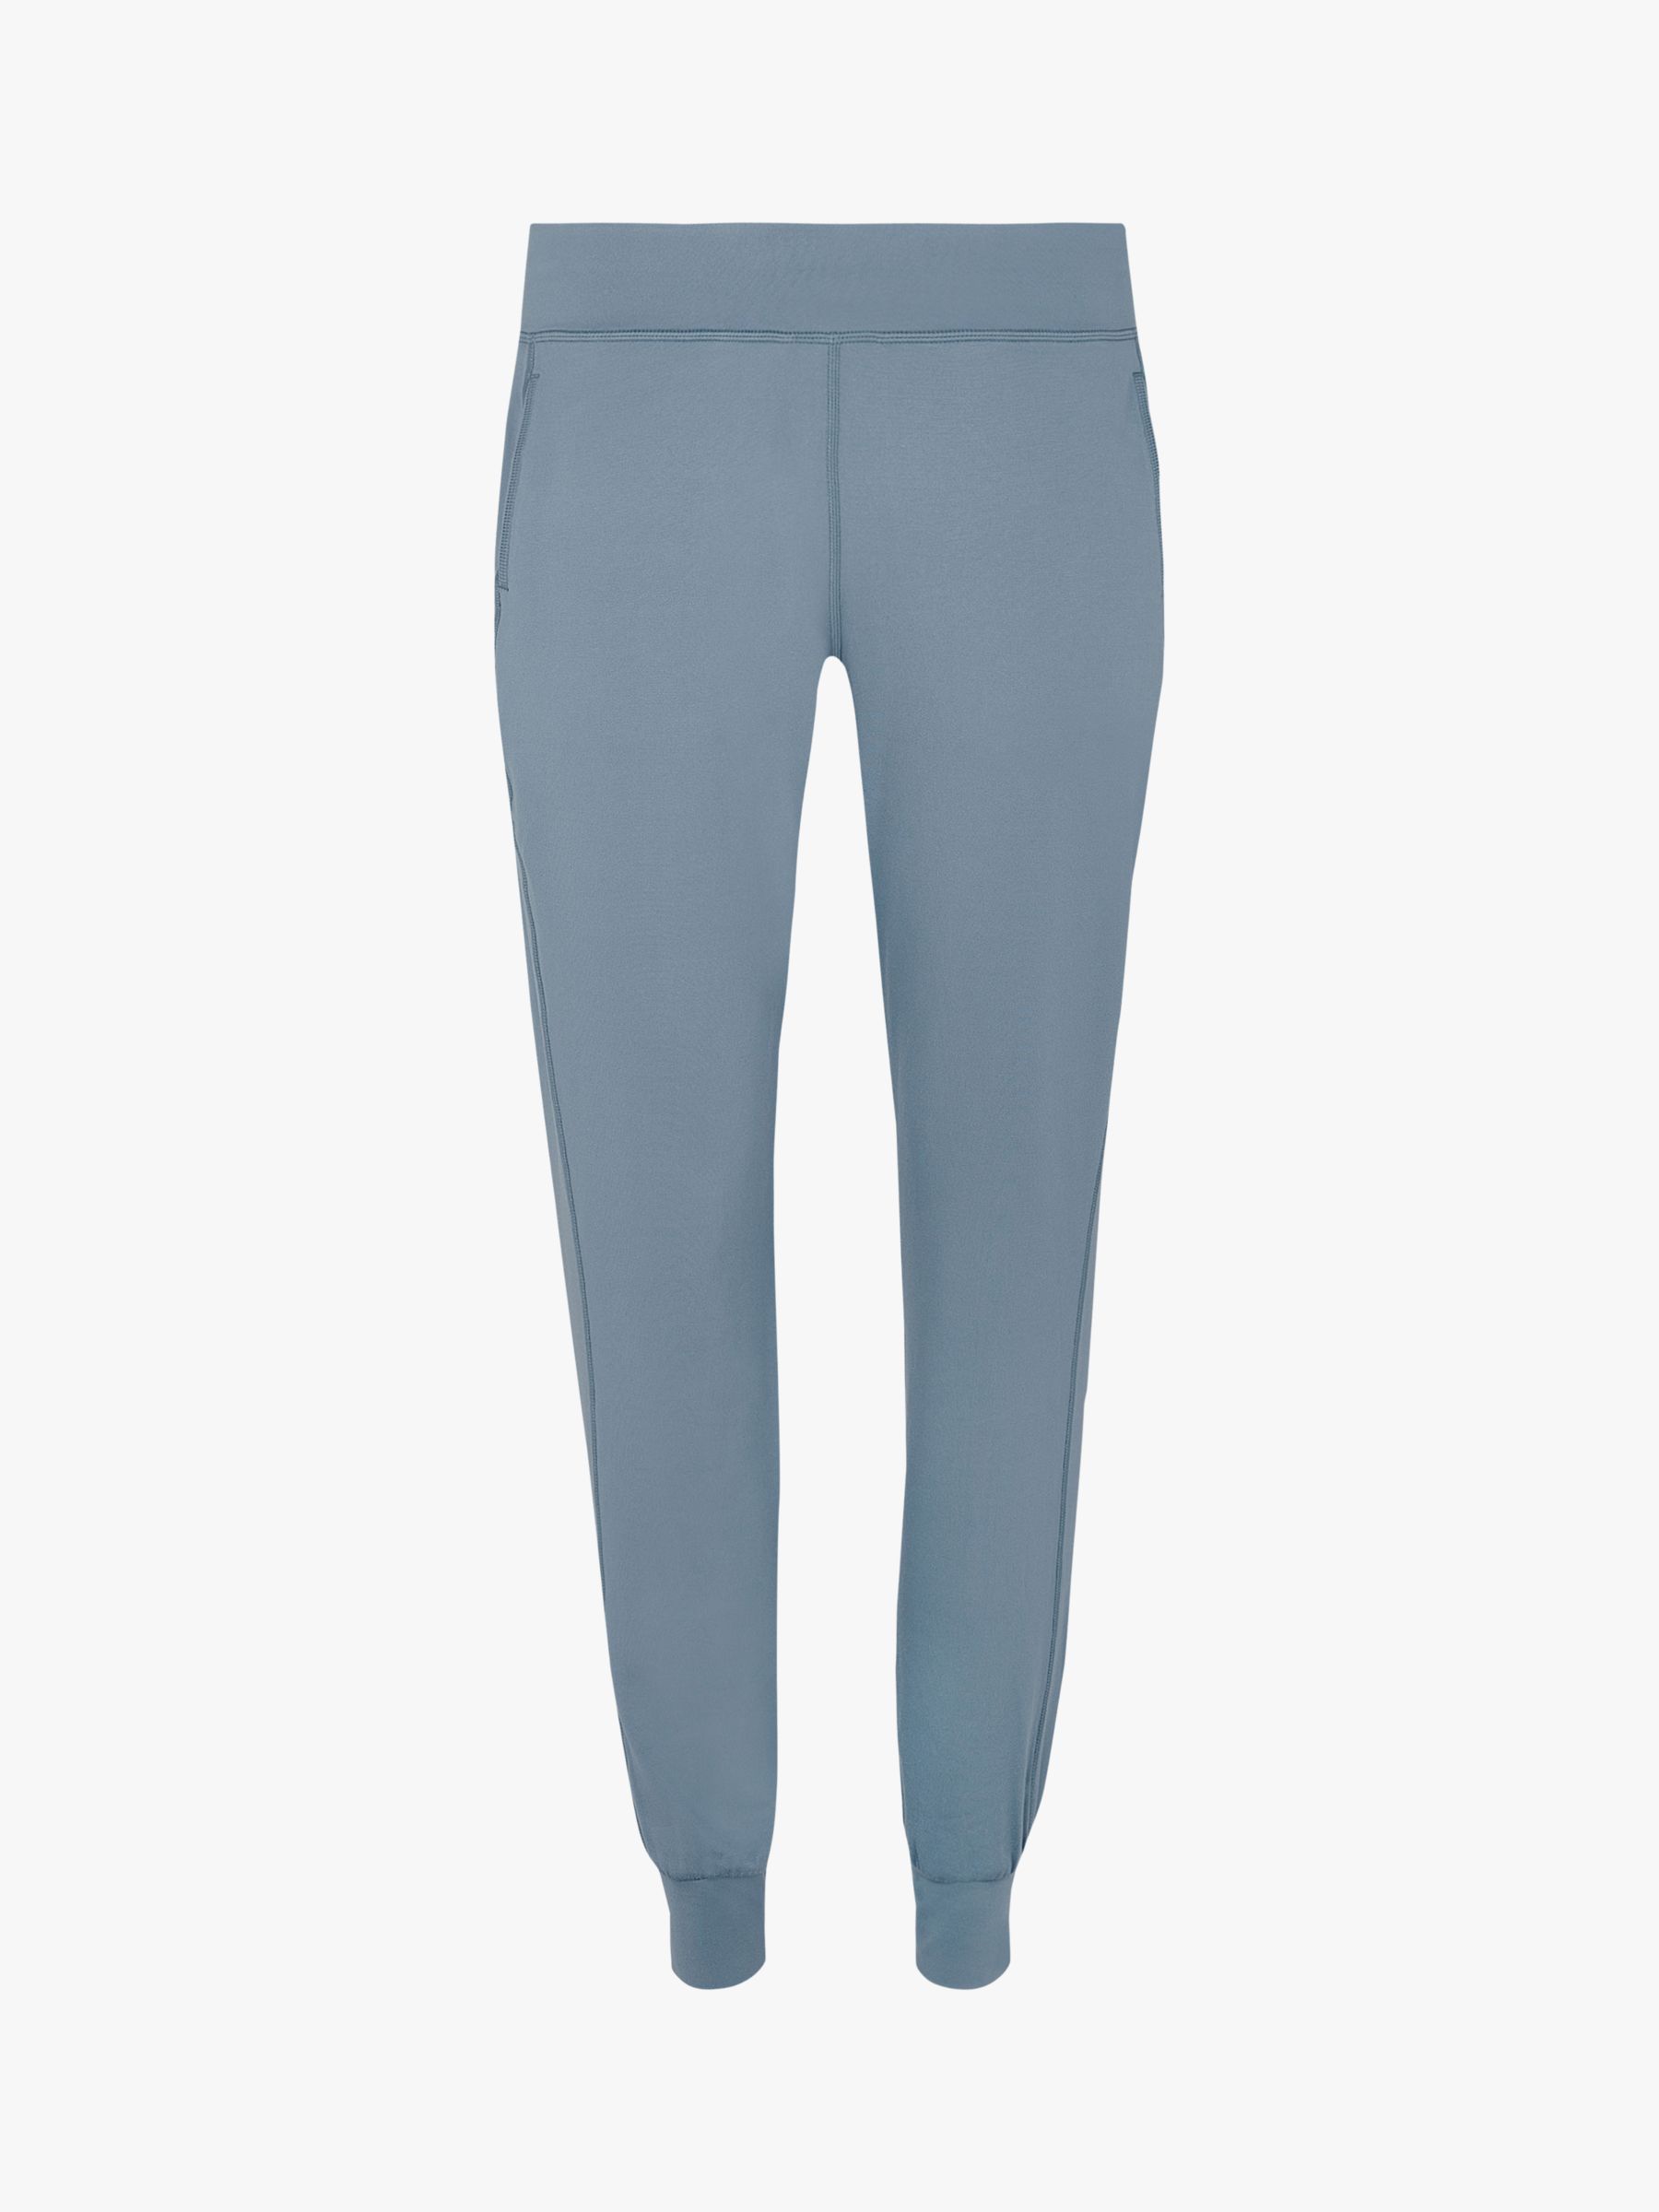 Sweaty Betty Gary 29 Yoga Pants, Sky Blue at John Lewis & Partners